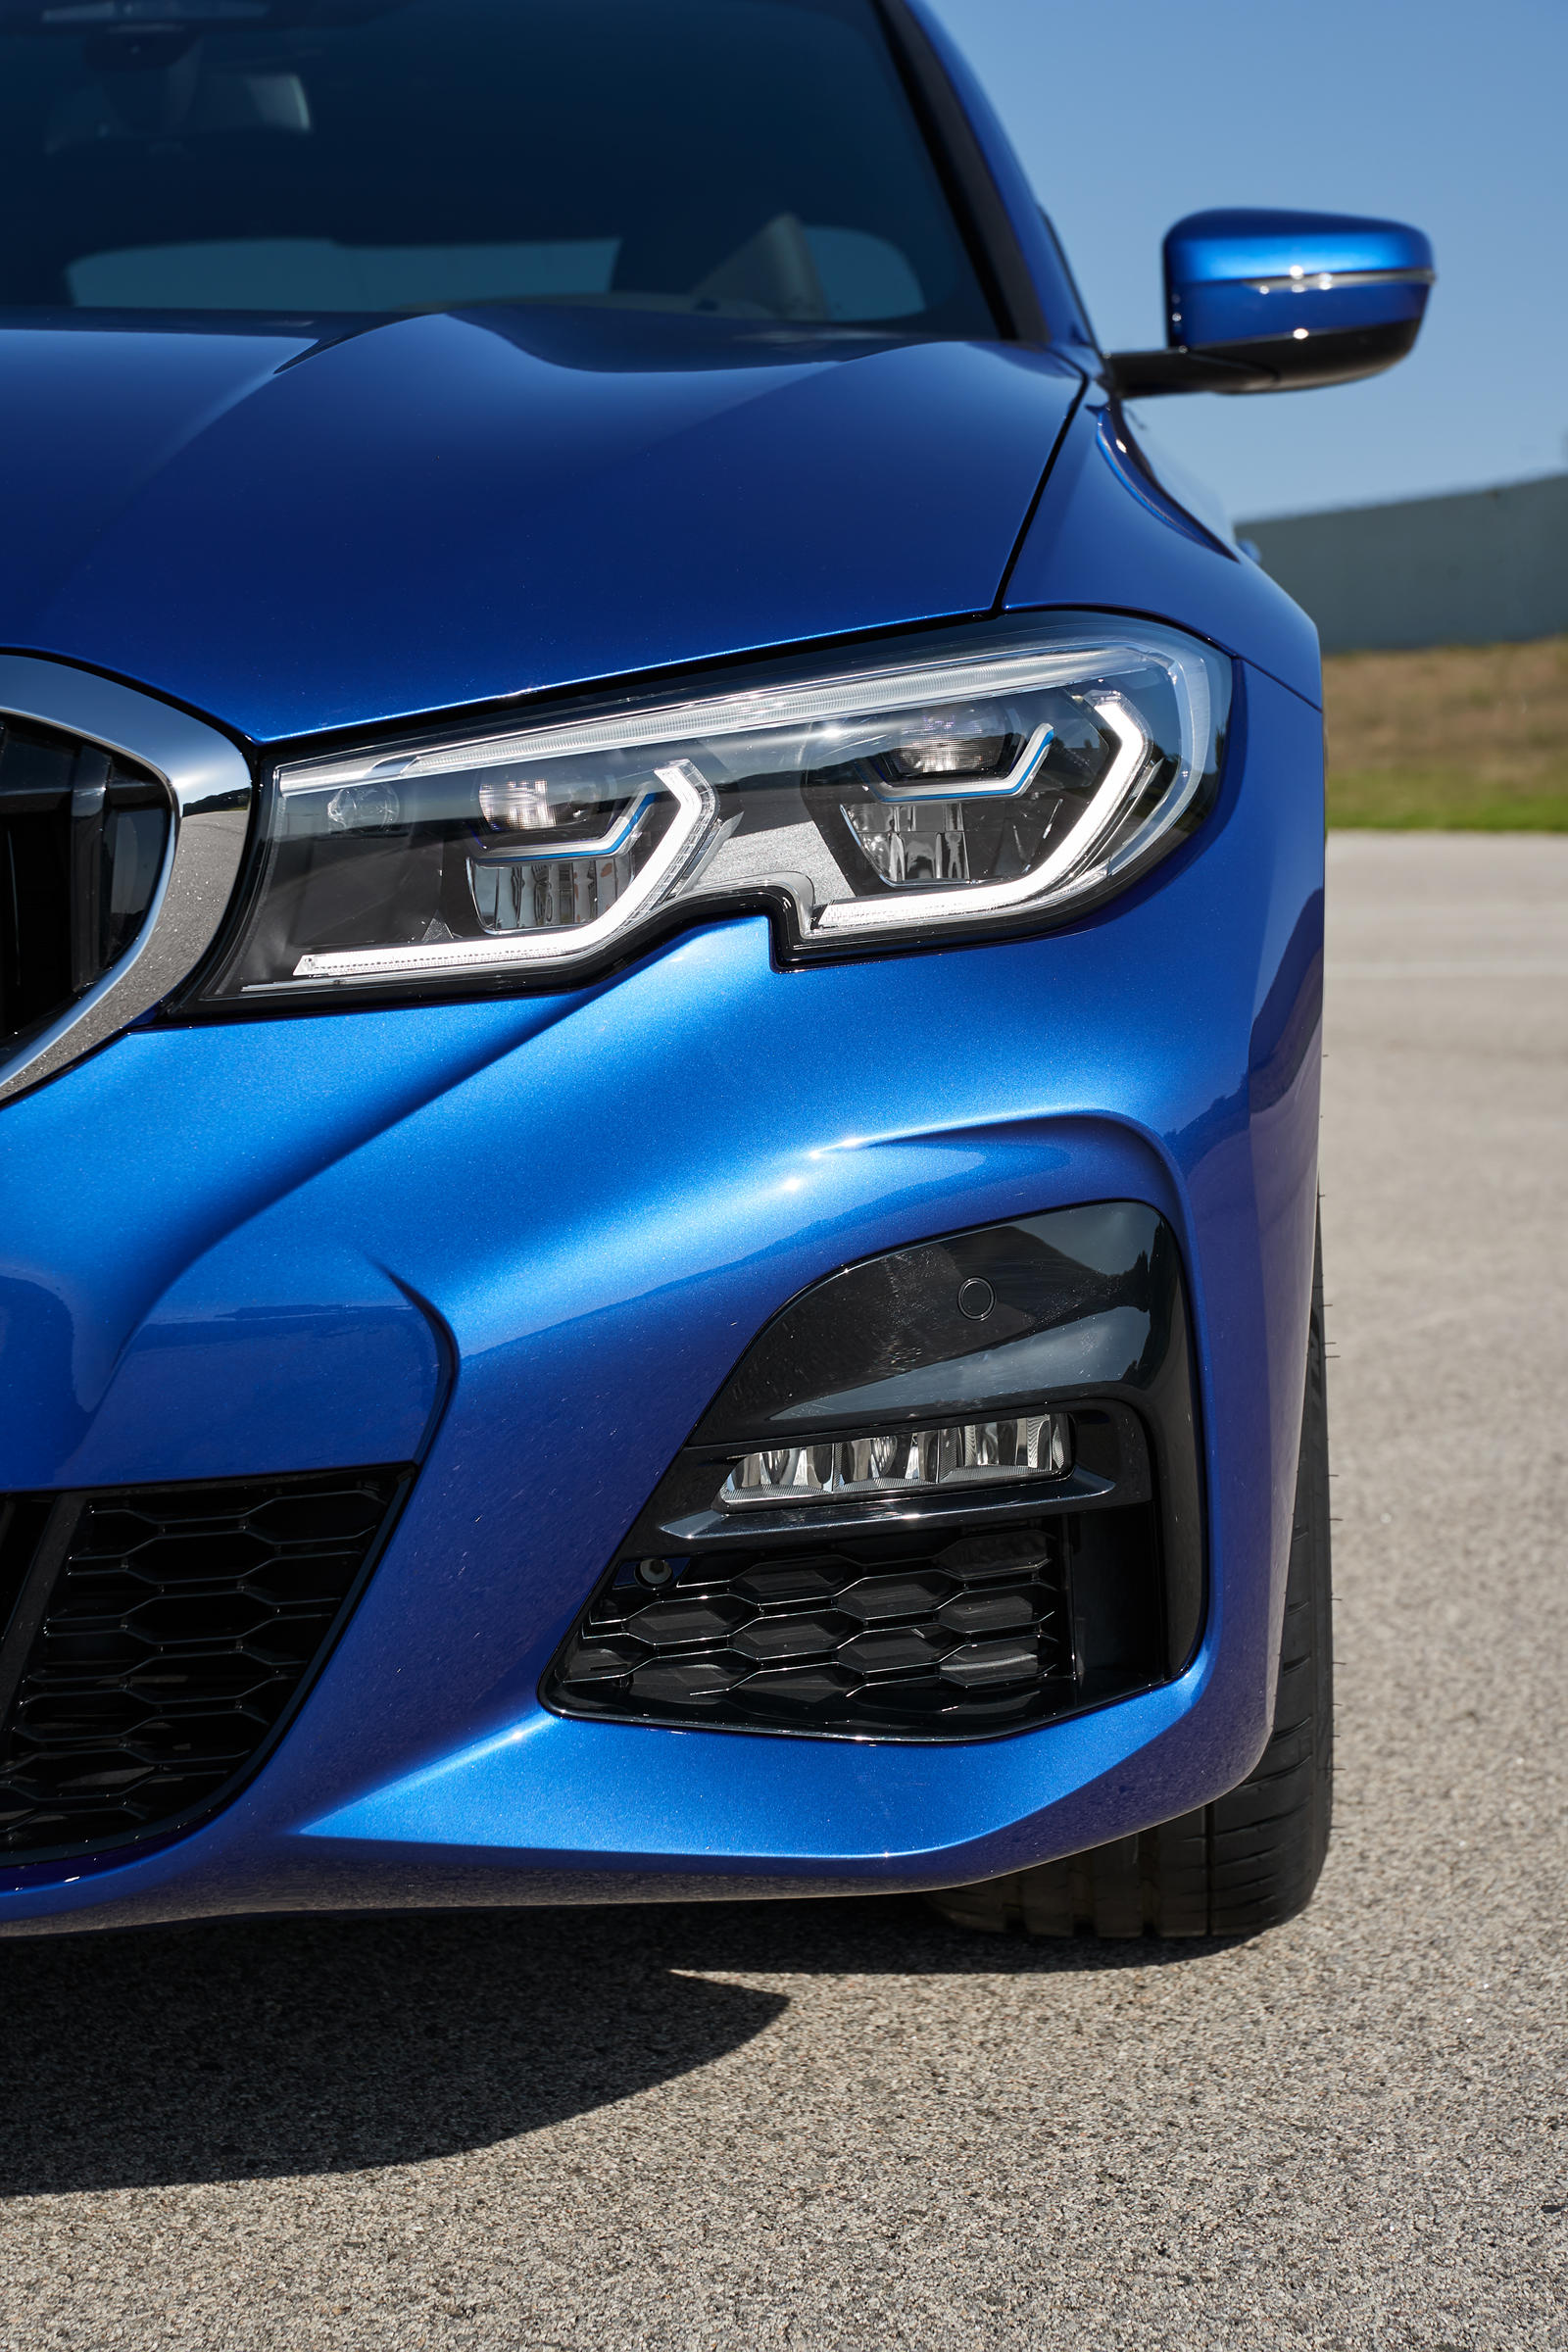 2022 BMW 3 Series Sedan Exterior Dimensions: Colors Options & Accessories